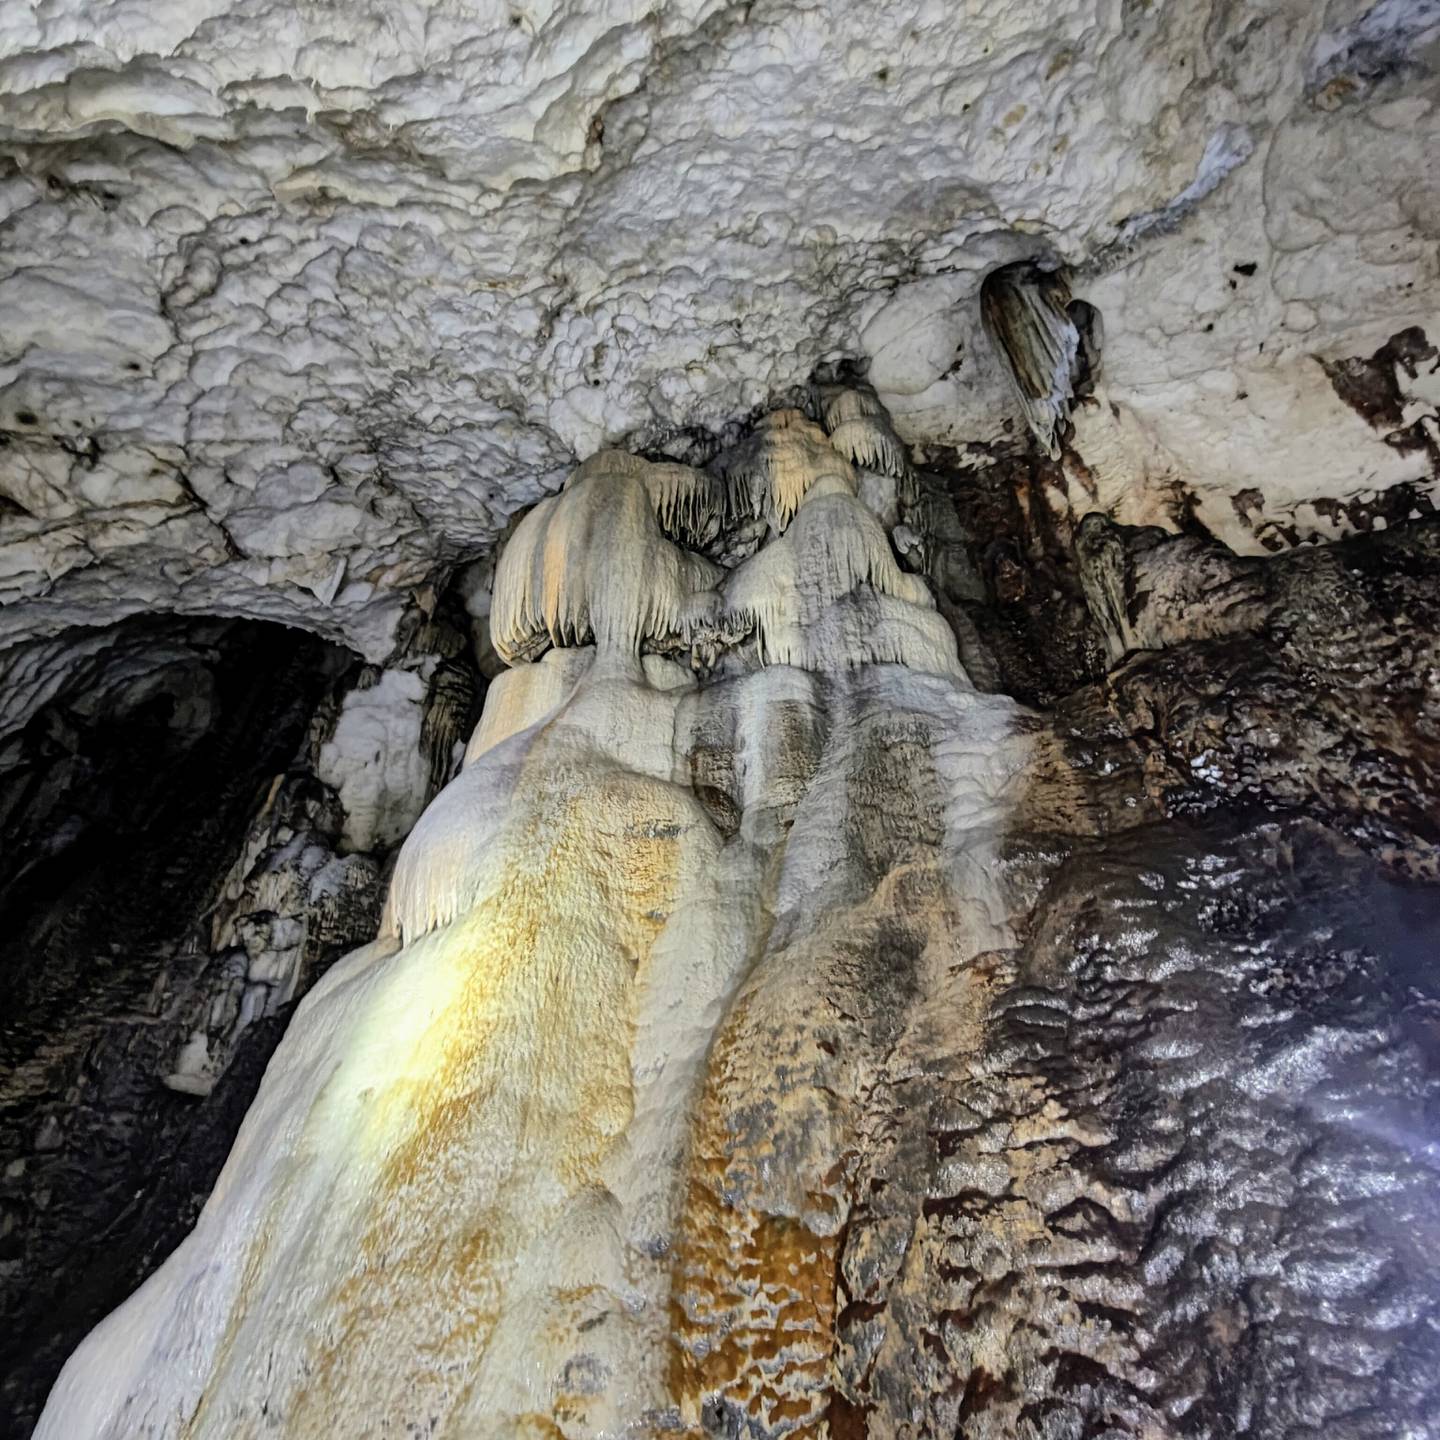 Stalactites and stalagmites in the cave system. Photo: Kalpana Sunder